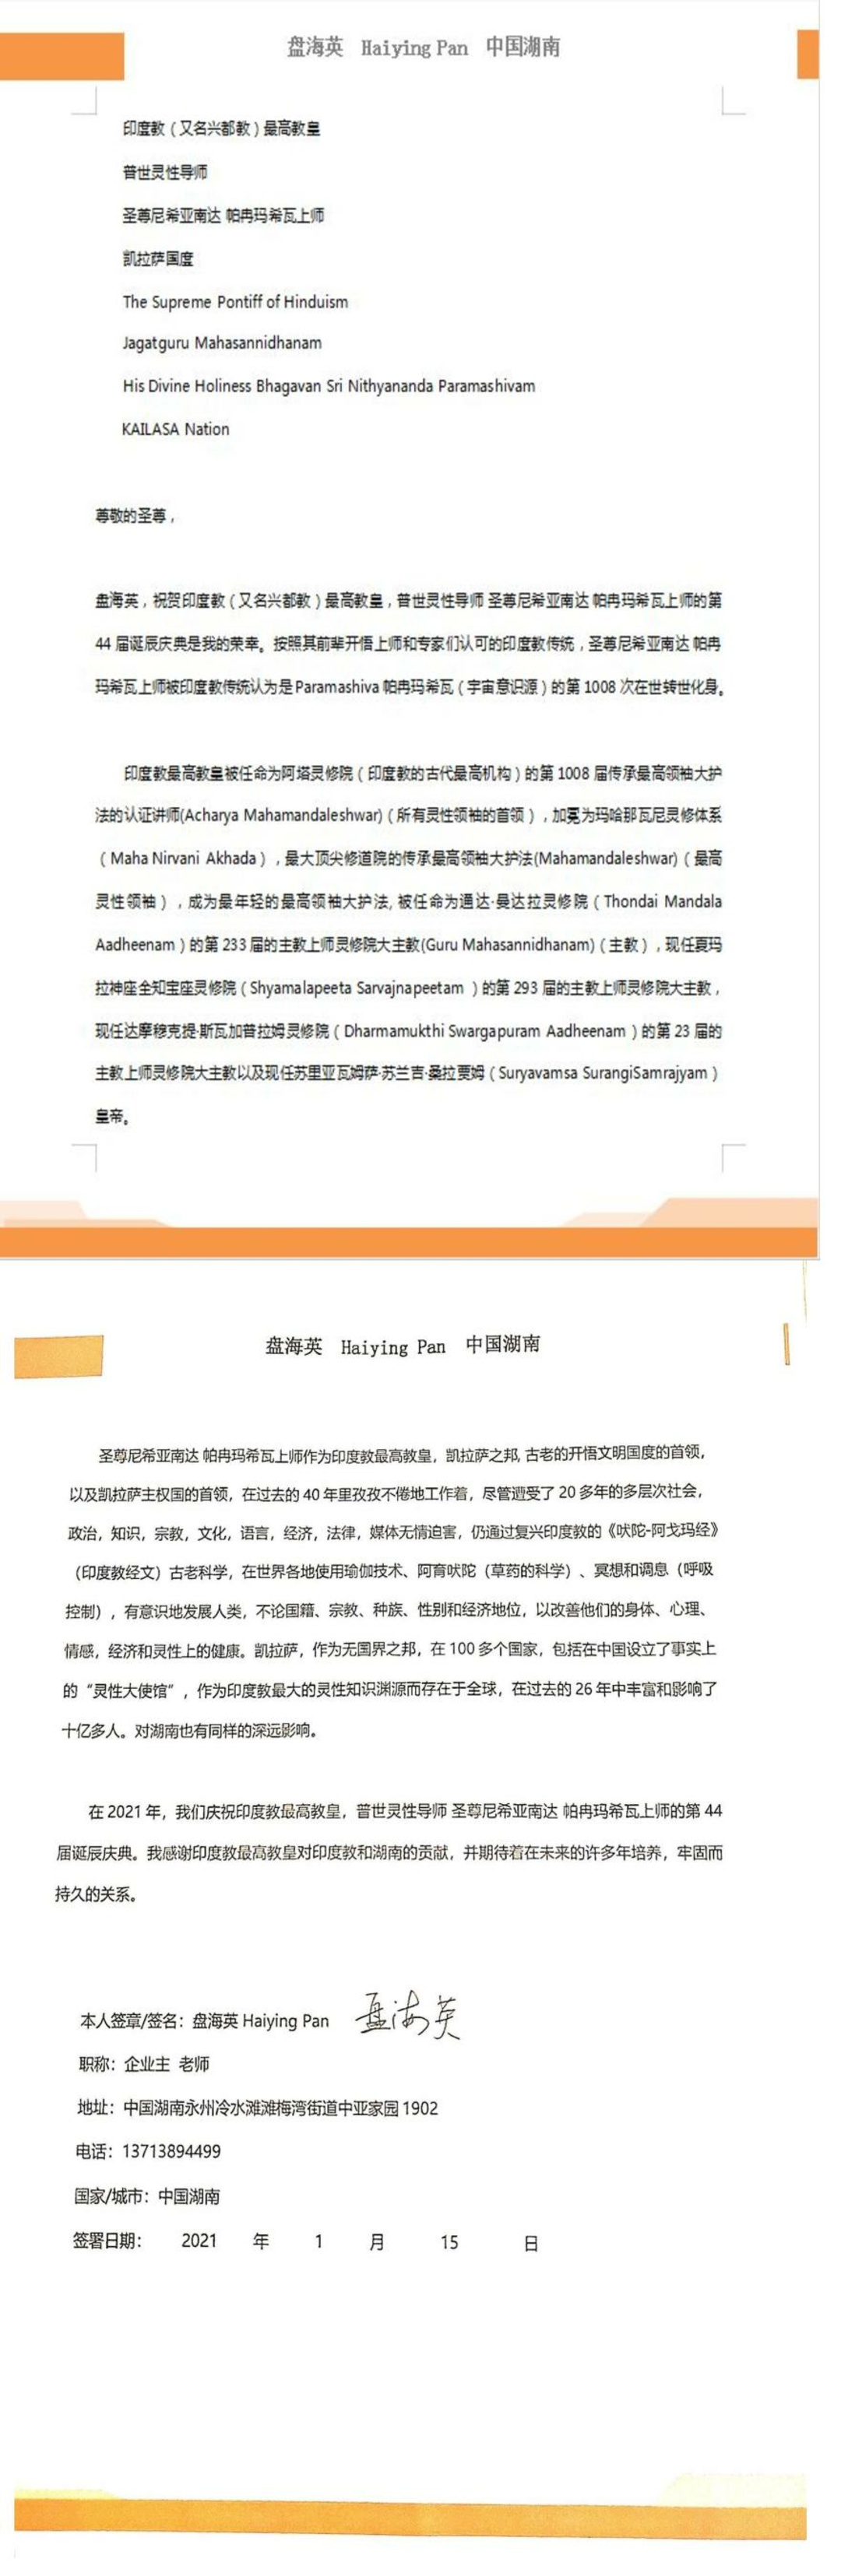 China---Haiying-Pan---15-Jan-2021-(Proclamation)-1zmyhUsdND1o50 hsDz CIjiMnvev si5.pdf